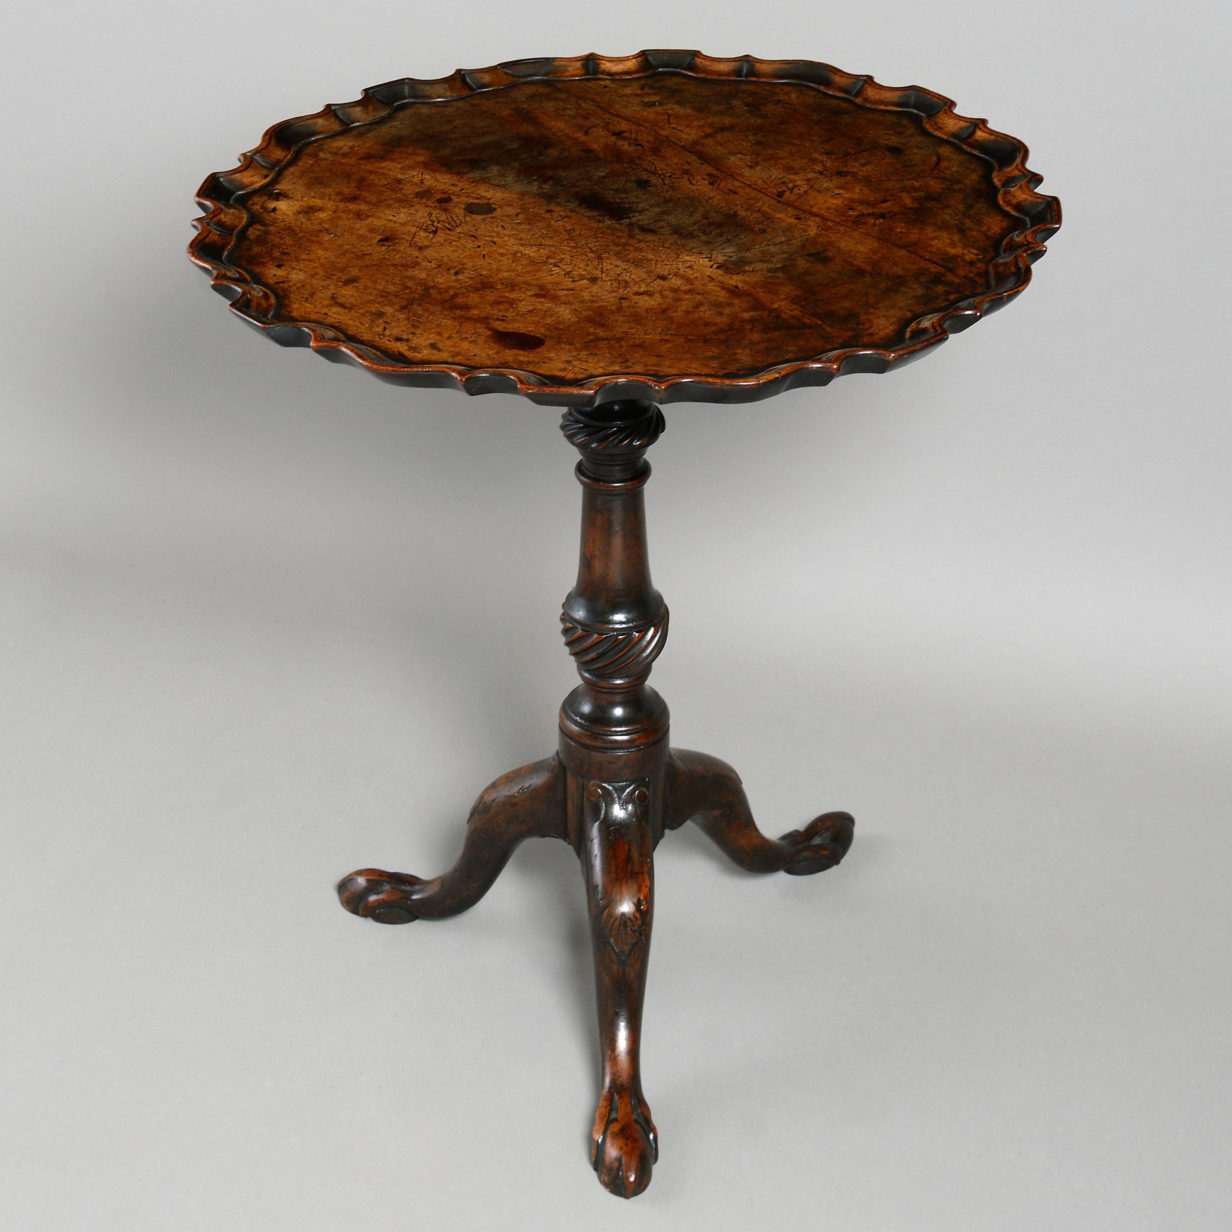 An 18th century george iii pie crust tripod table